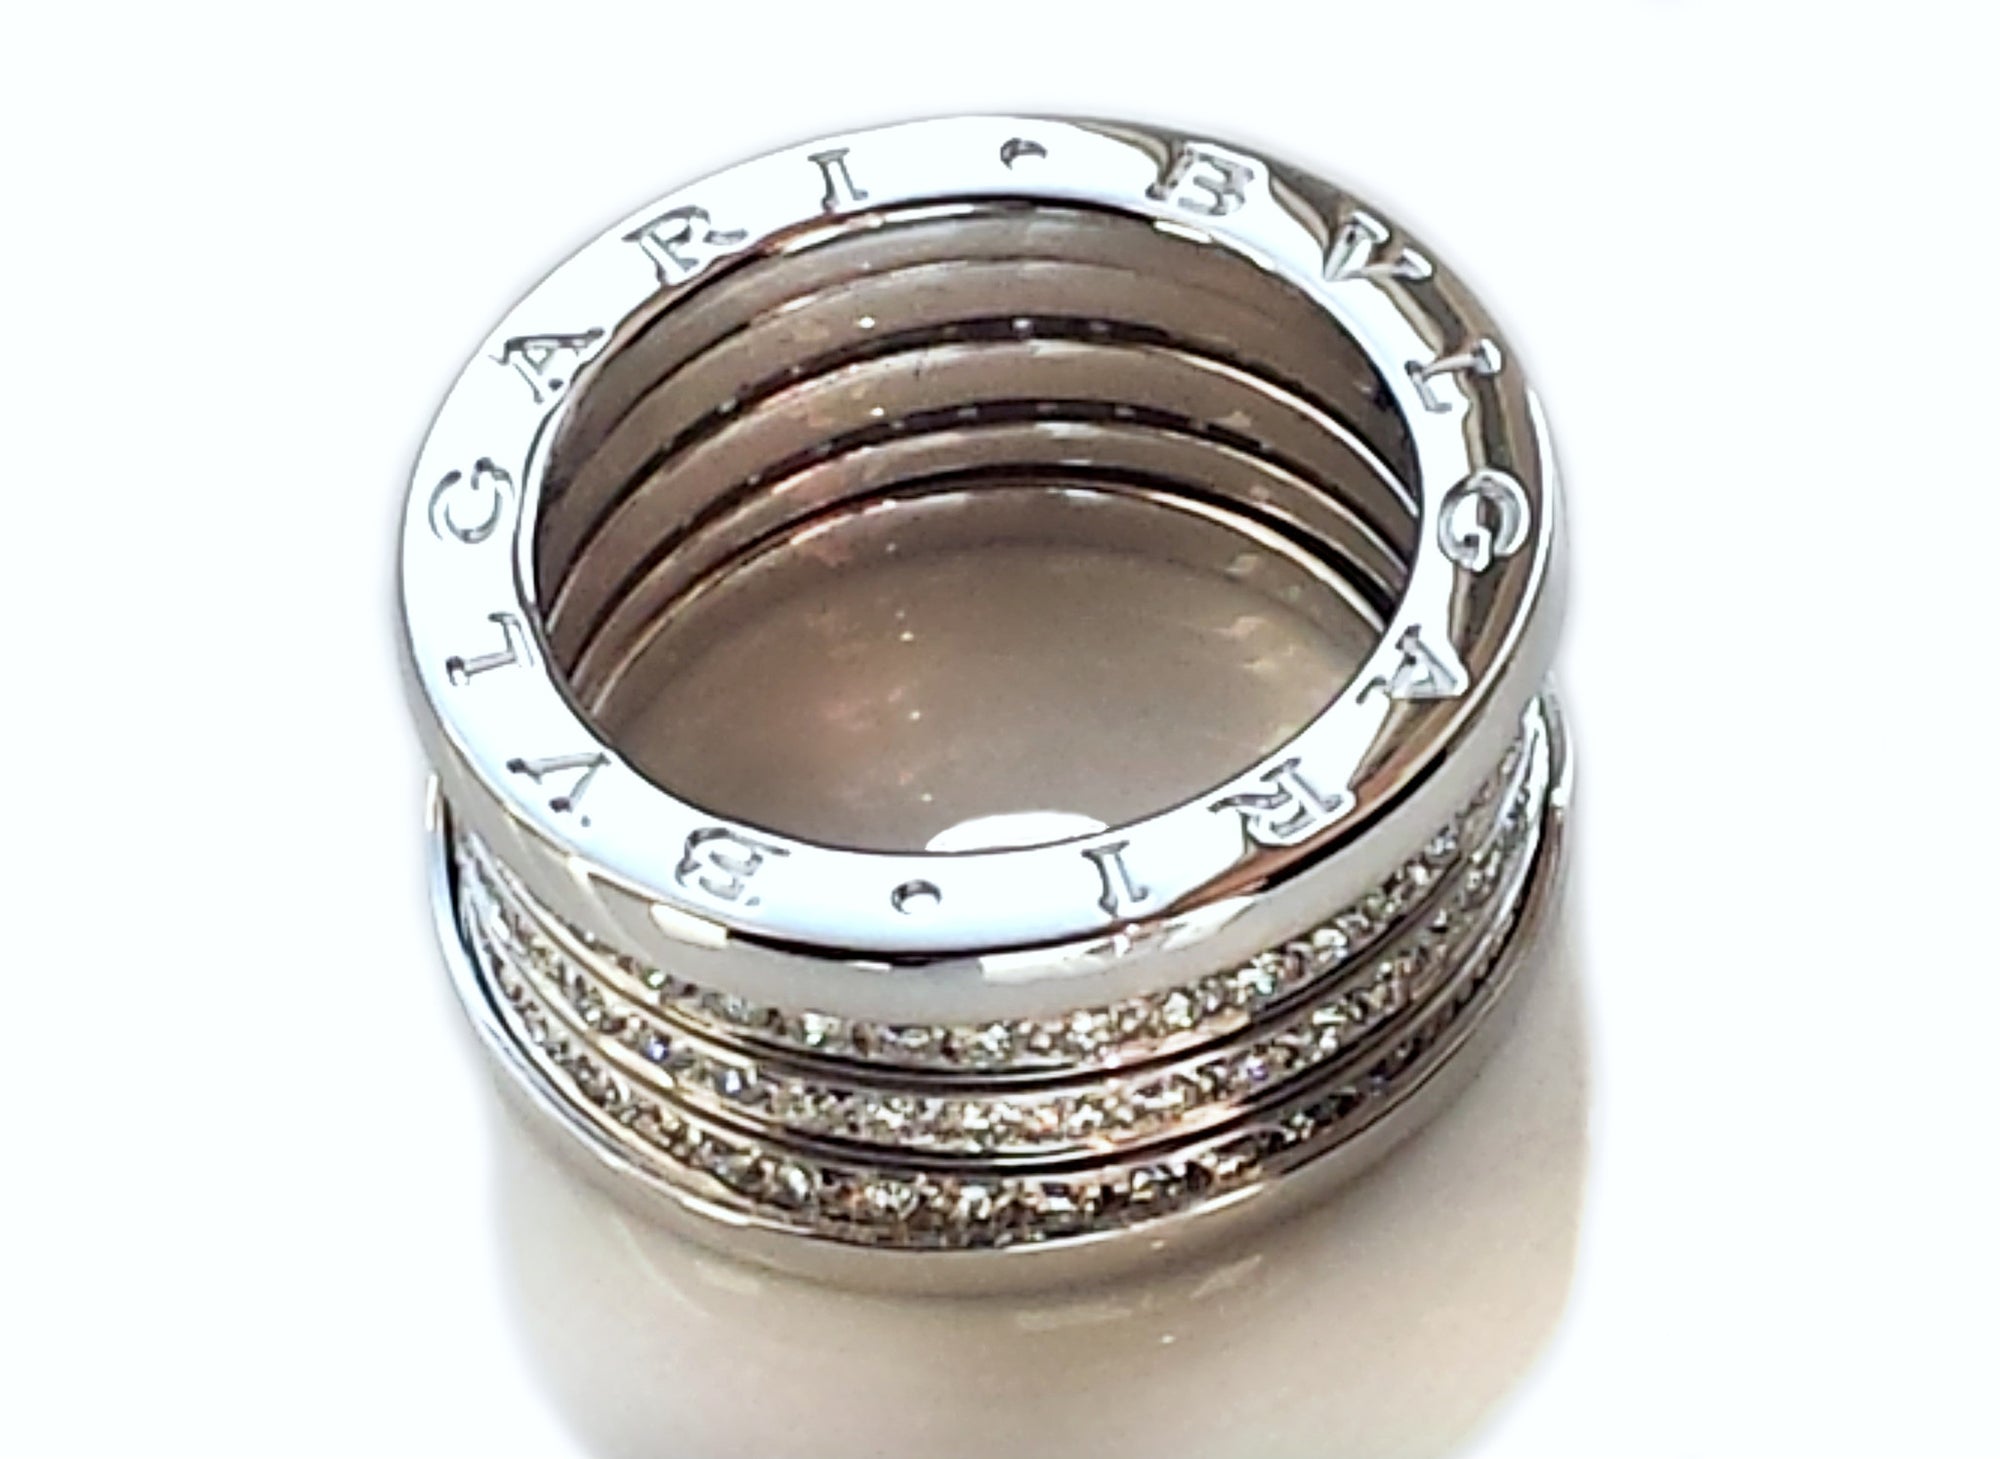 Bulgari B.Zero1 4-Band Diamond Ring in 18k White Gold, Size 56